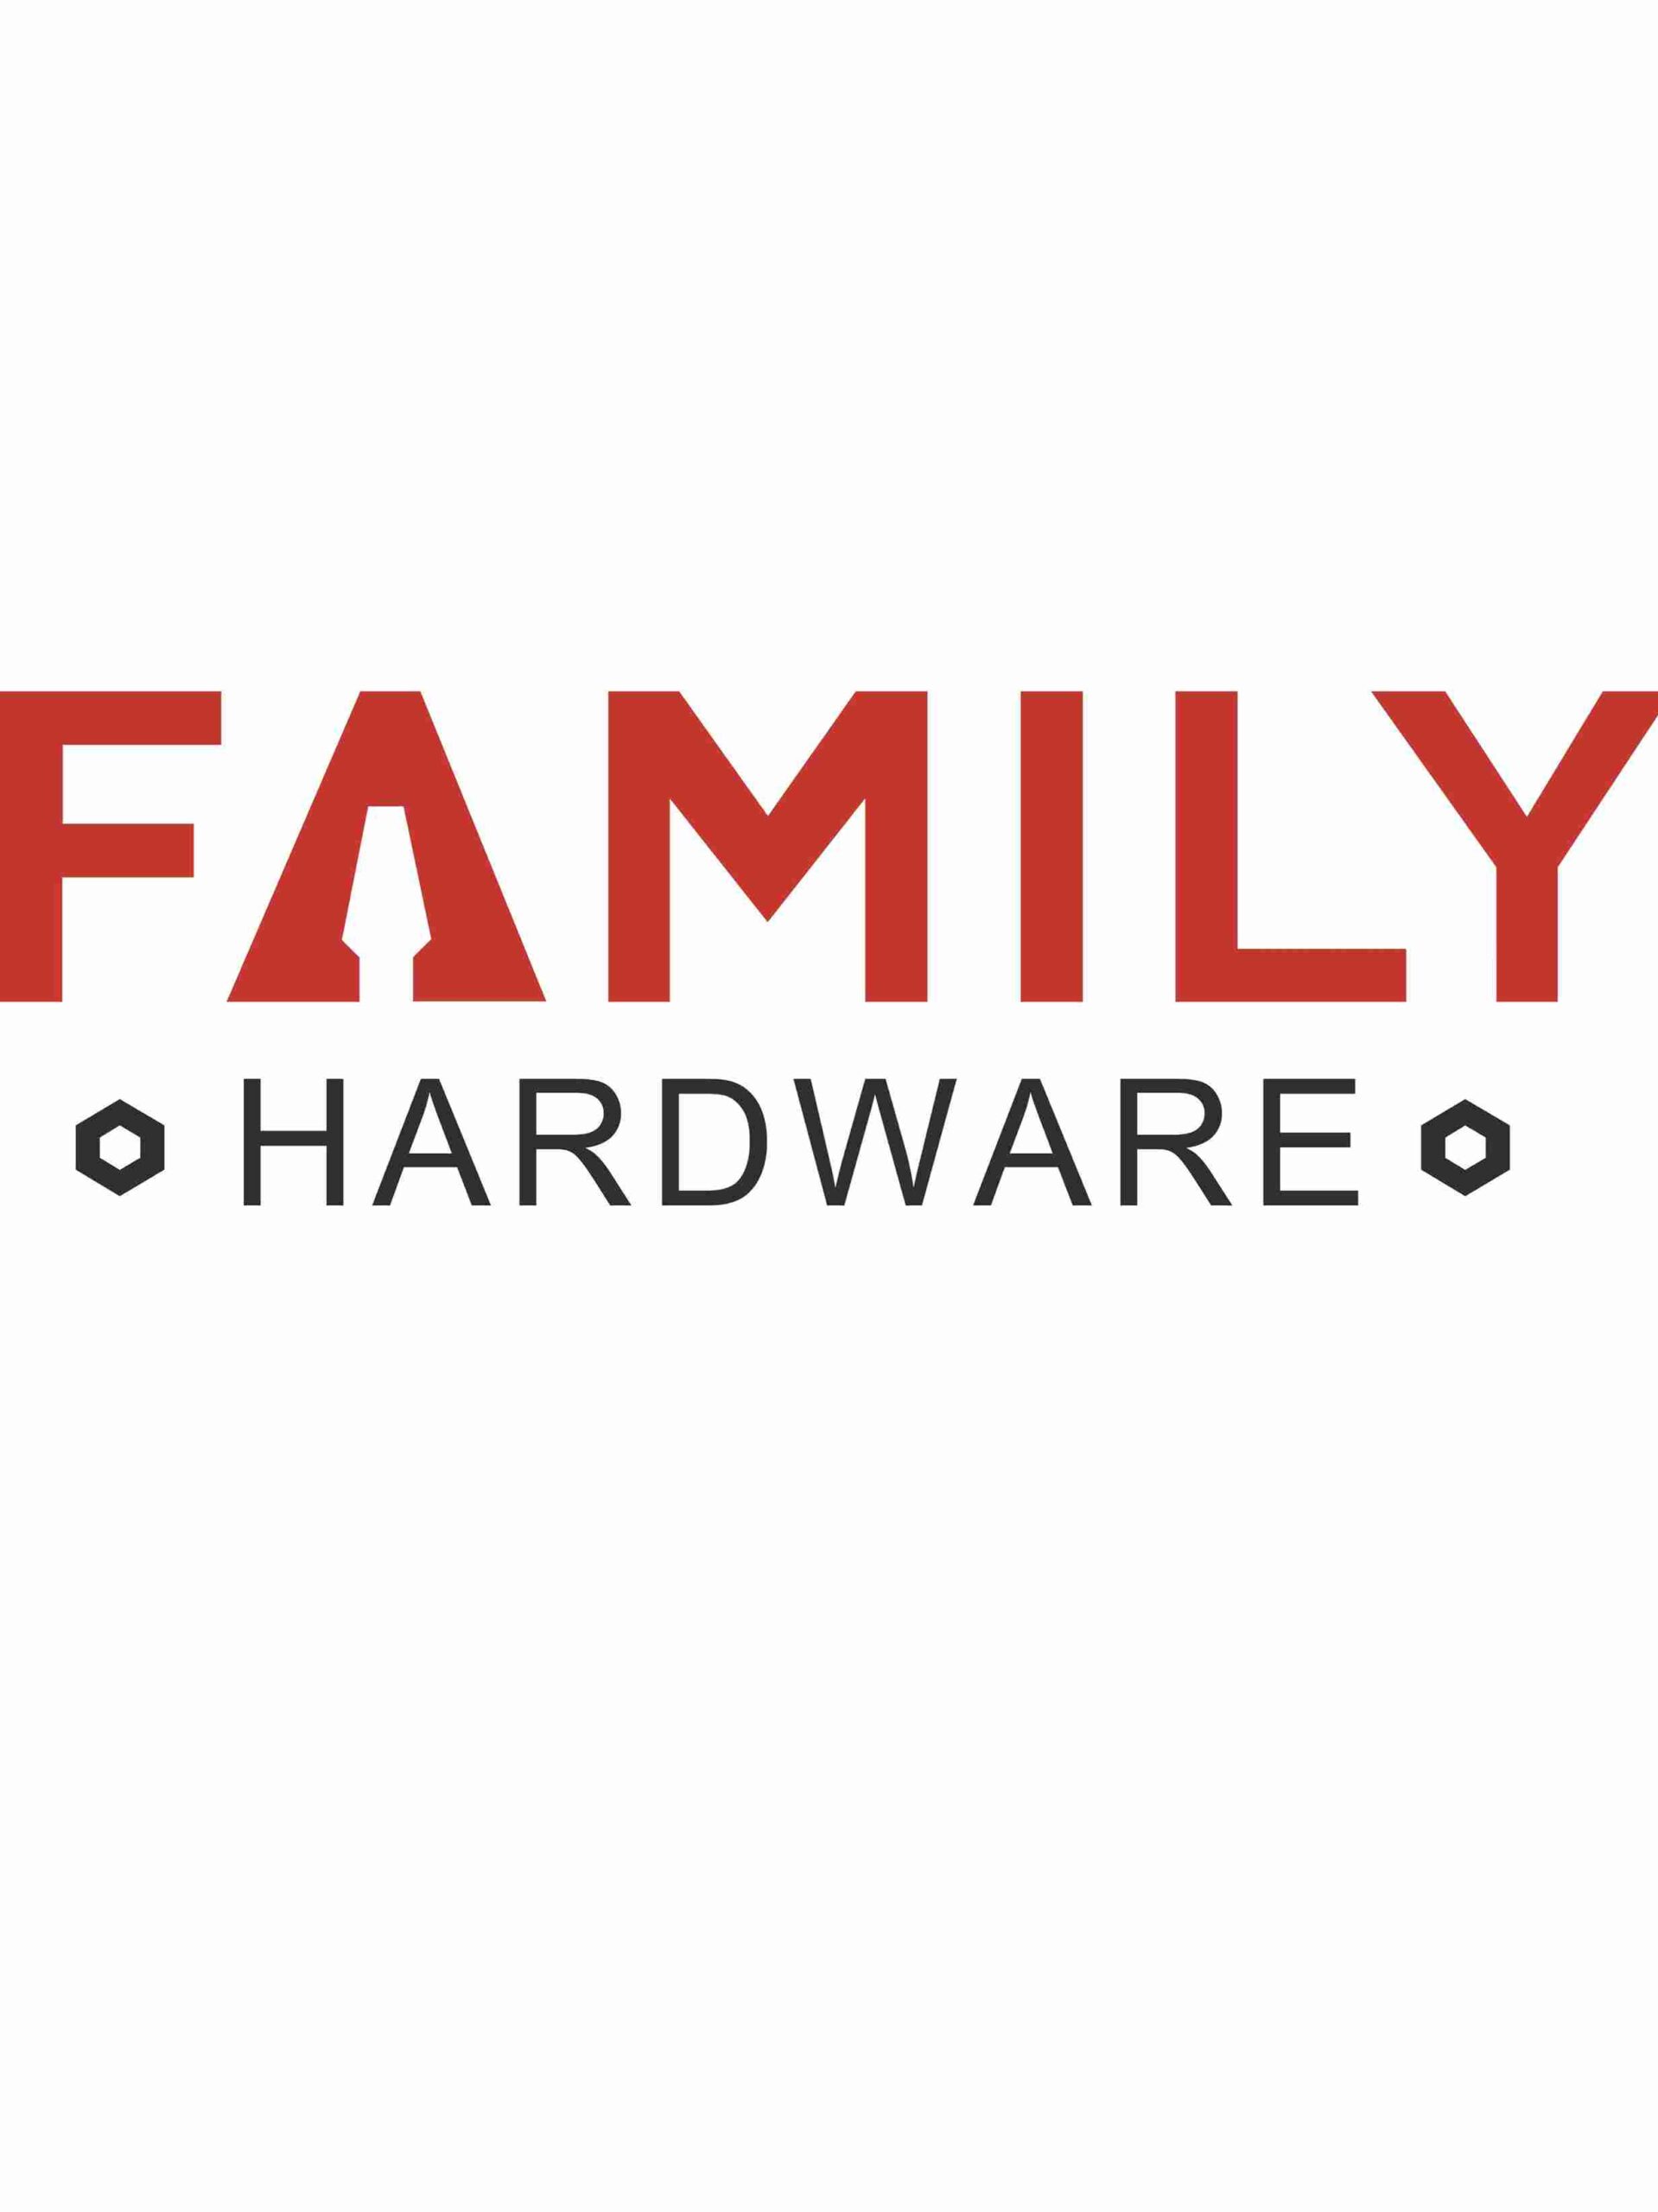 Family Hardware